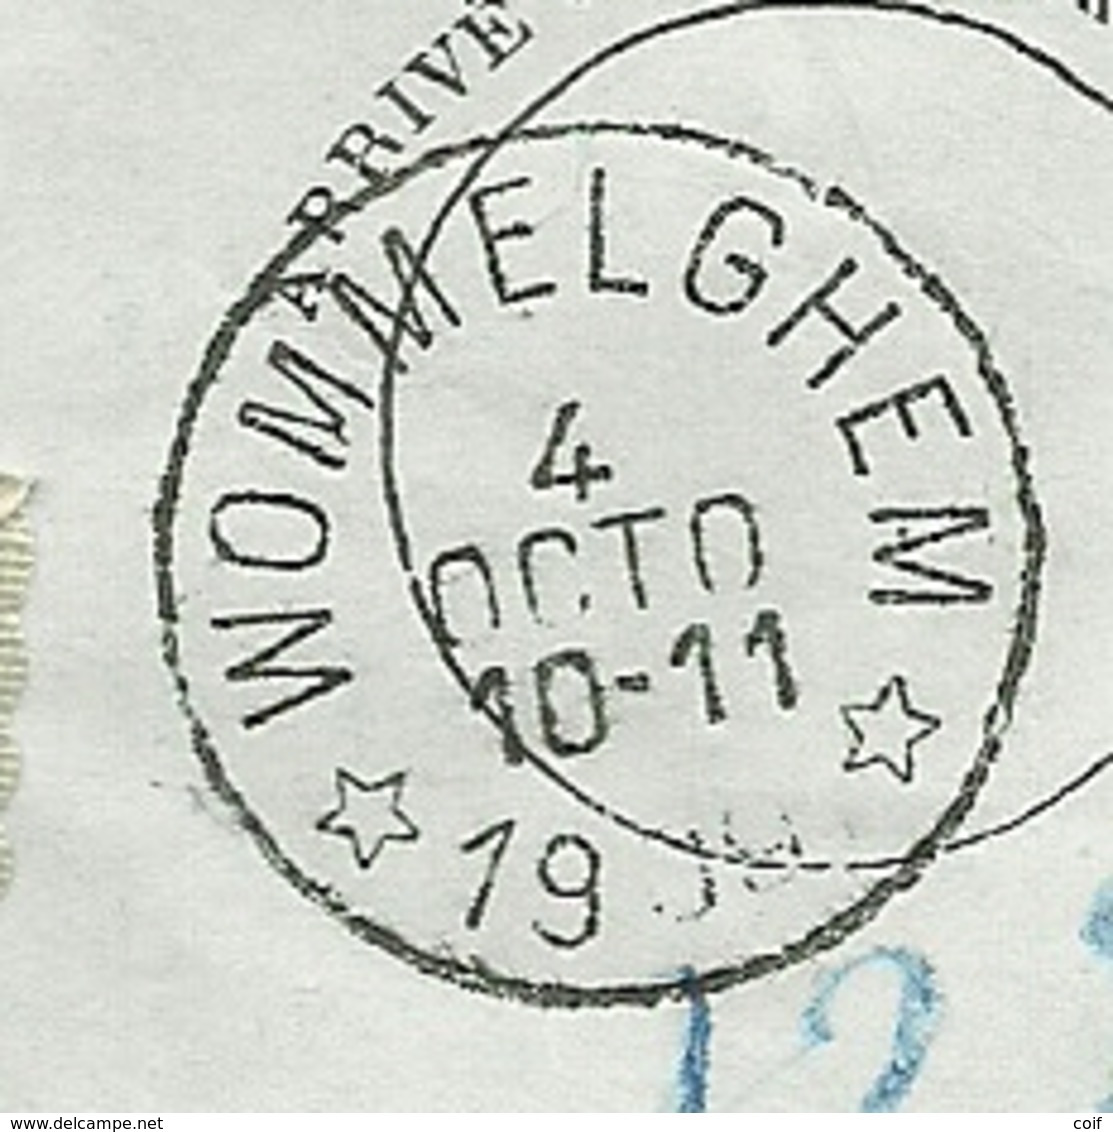 Telegram Met Sterstempel (Relais) * WOMMELGHEM * - Telegrams